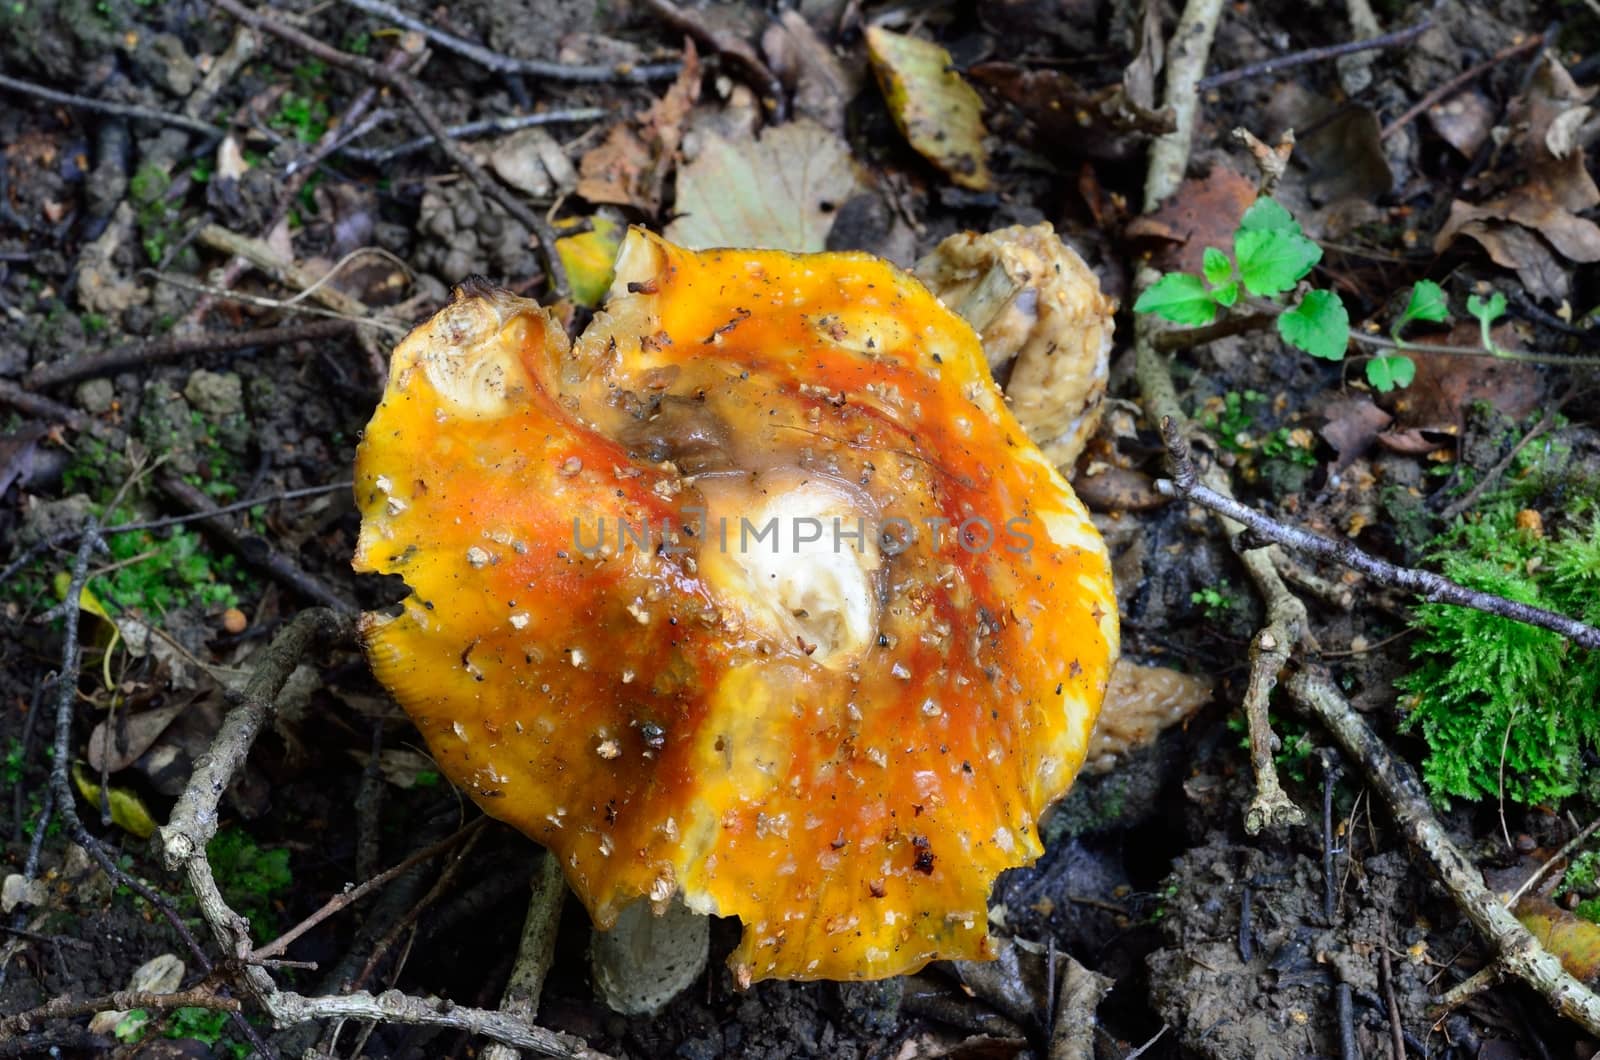 Decaying orange mushroom